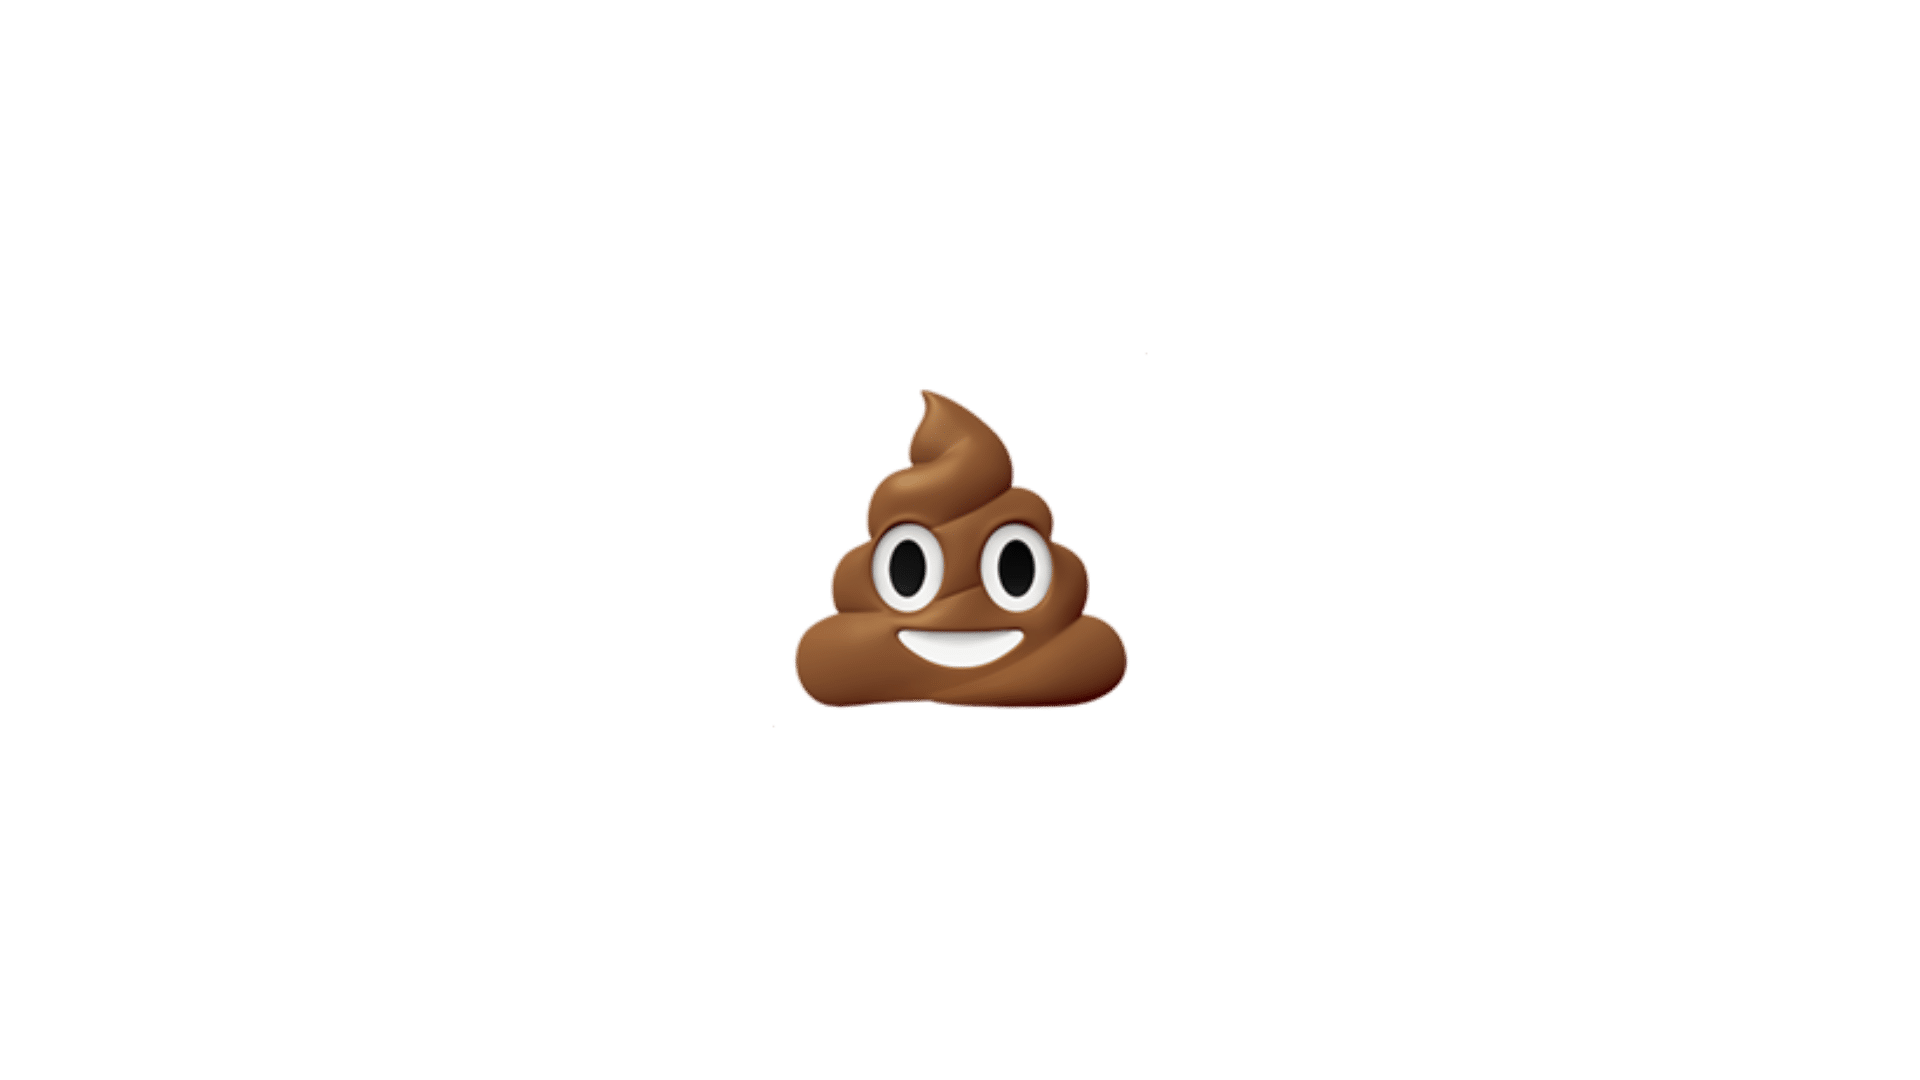 Bildillustration von poo emoji